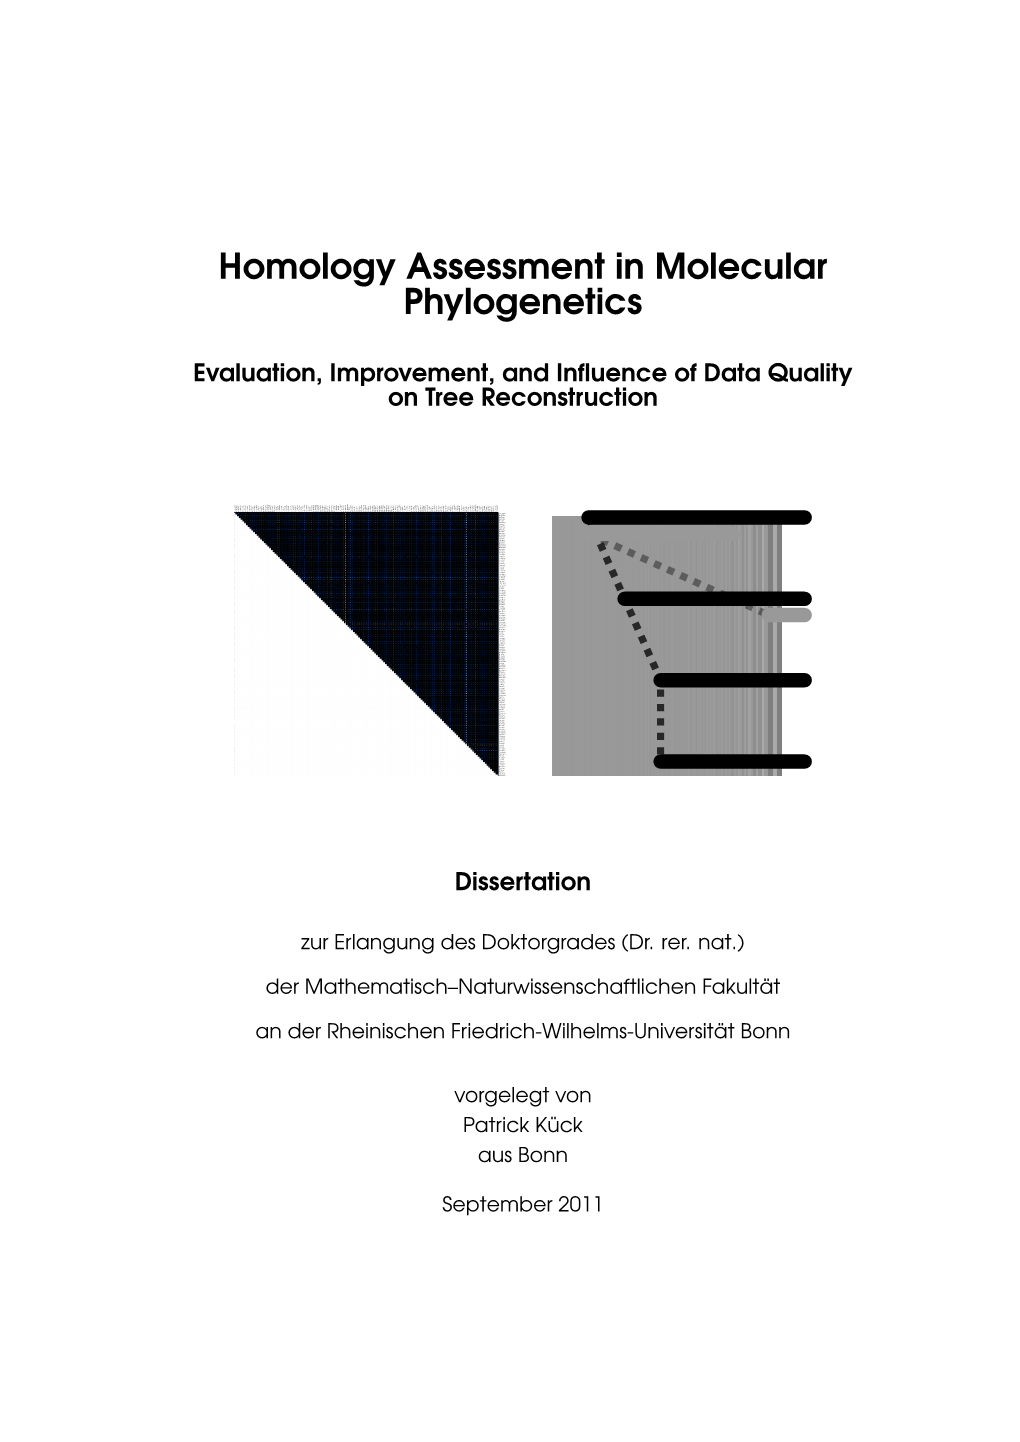 Homology Assessment in Molecular Phylogenetics